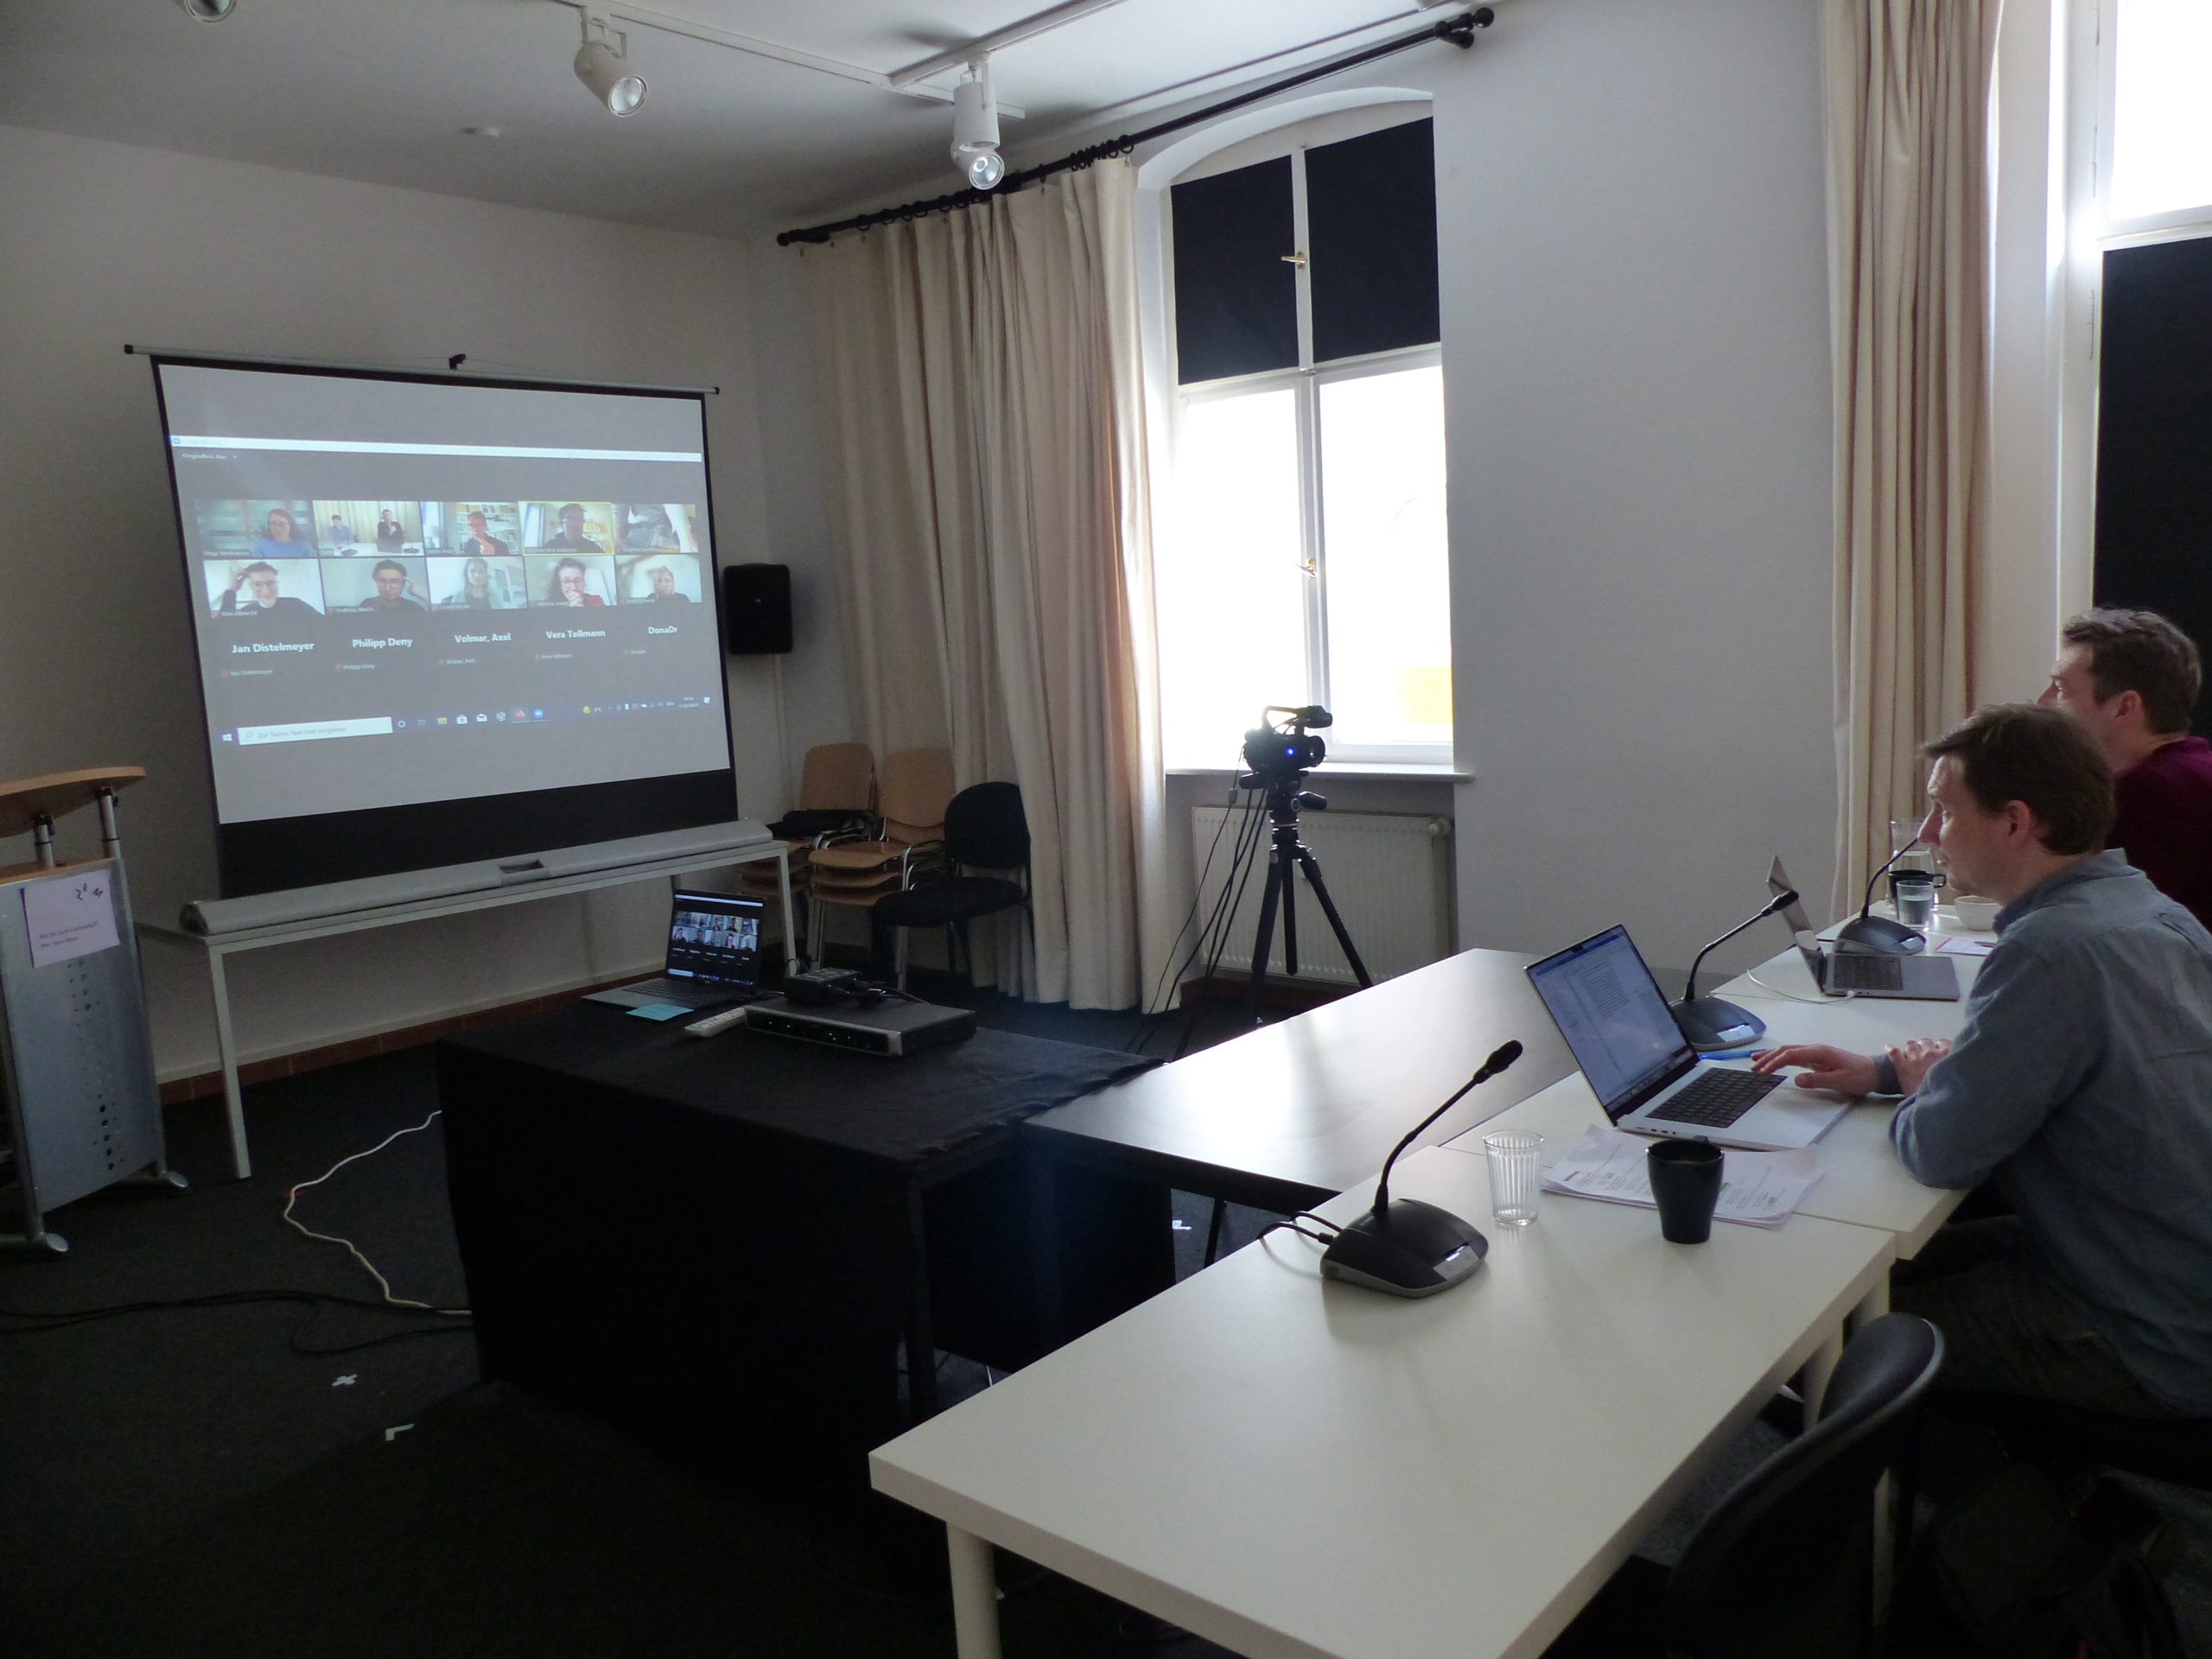 Authors‘ Workshop “Video Conferencing. Practices, Politics, Aesthetics”